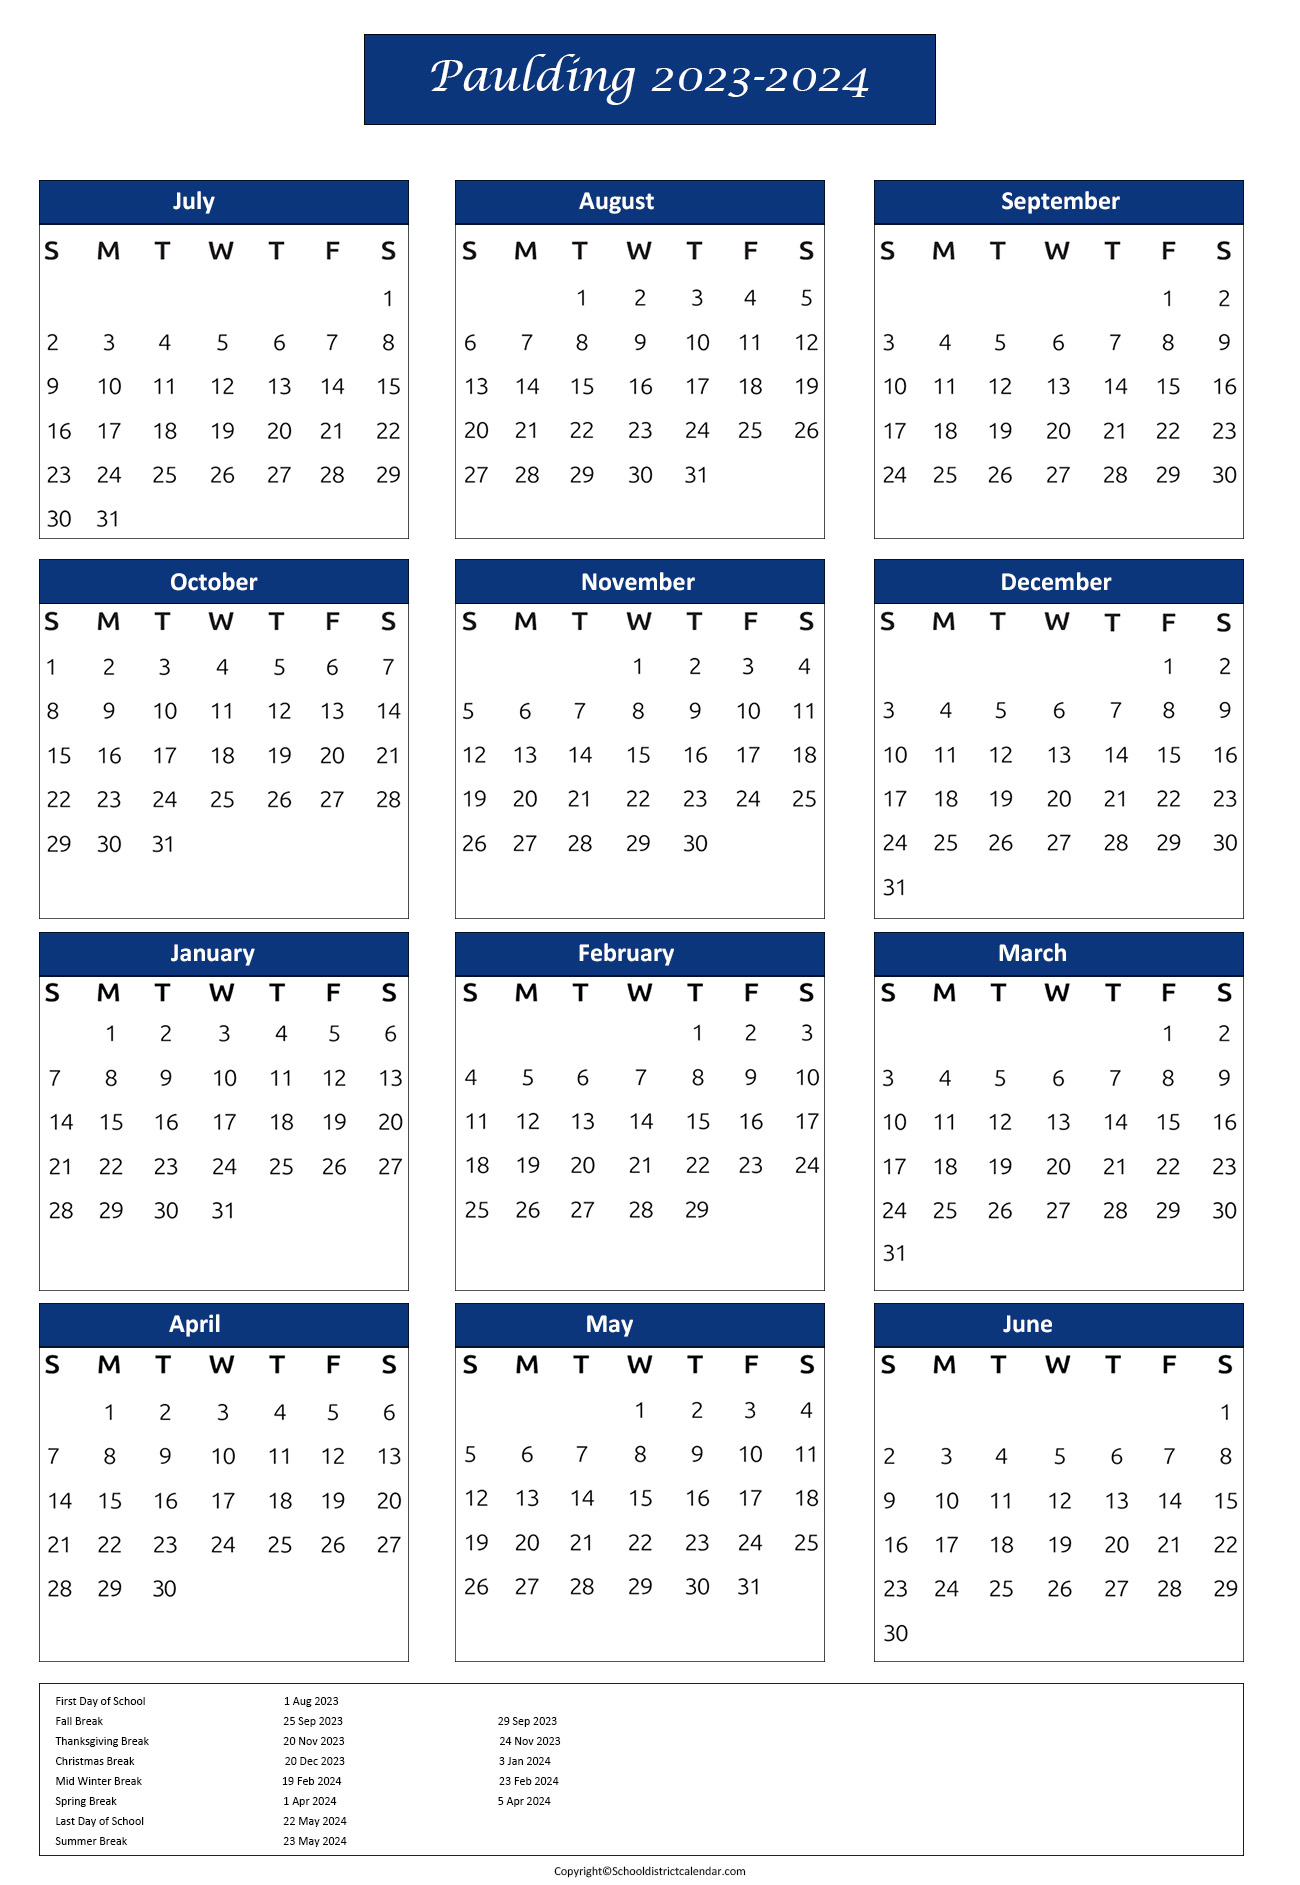 Paulding County School District Calendar Holidays 20232024